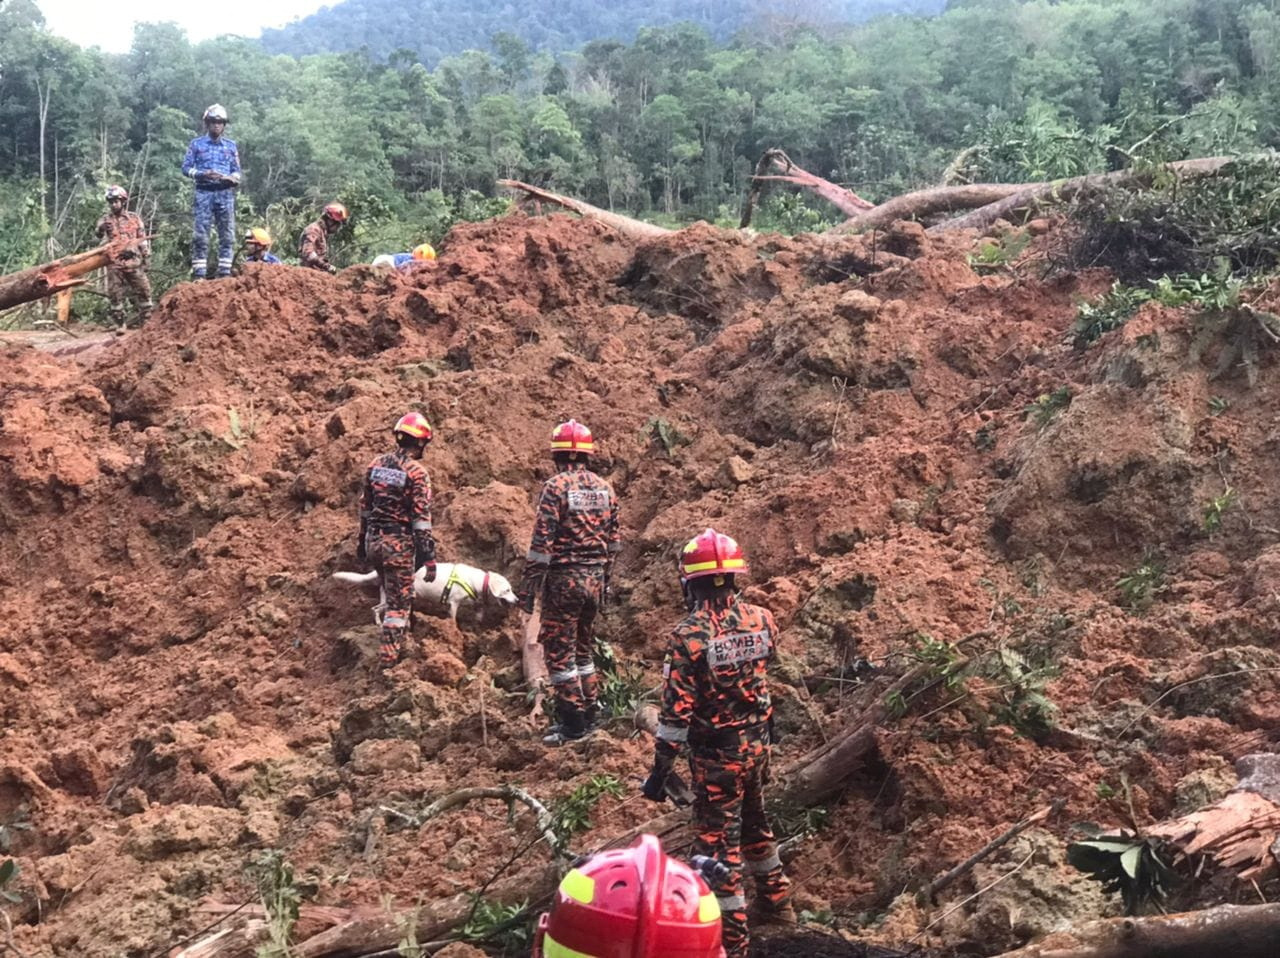 Landslide in Batang Kali, Selangor State